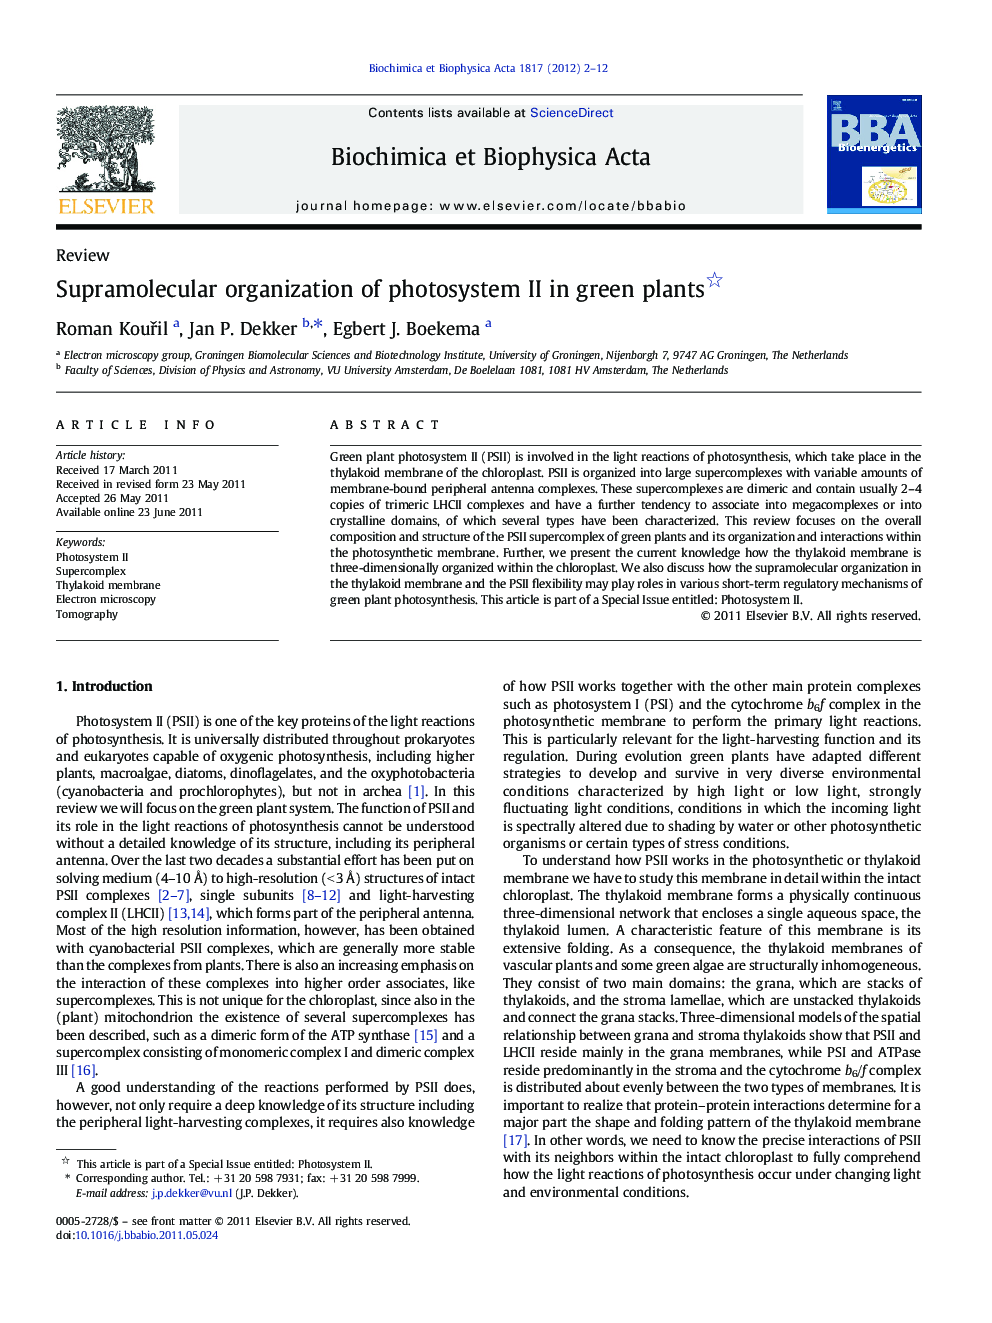 Supramolecular organization of photosystem II in green plants